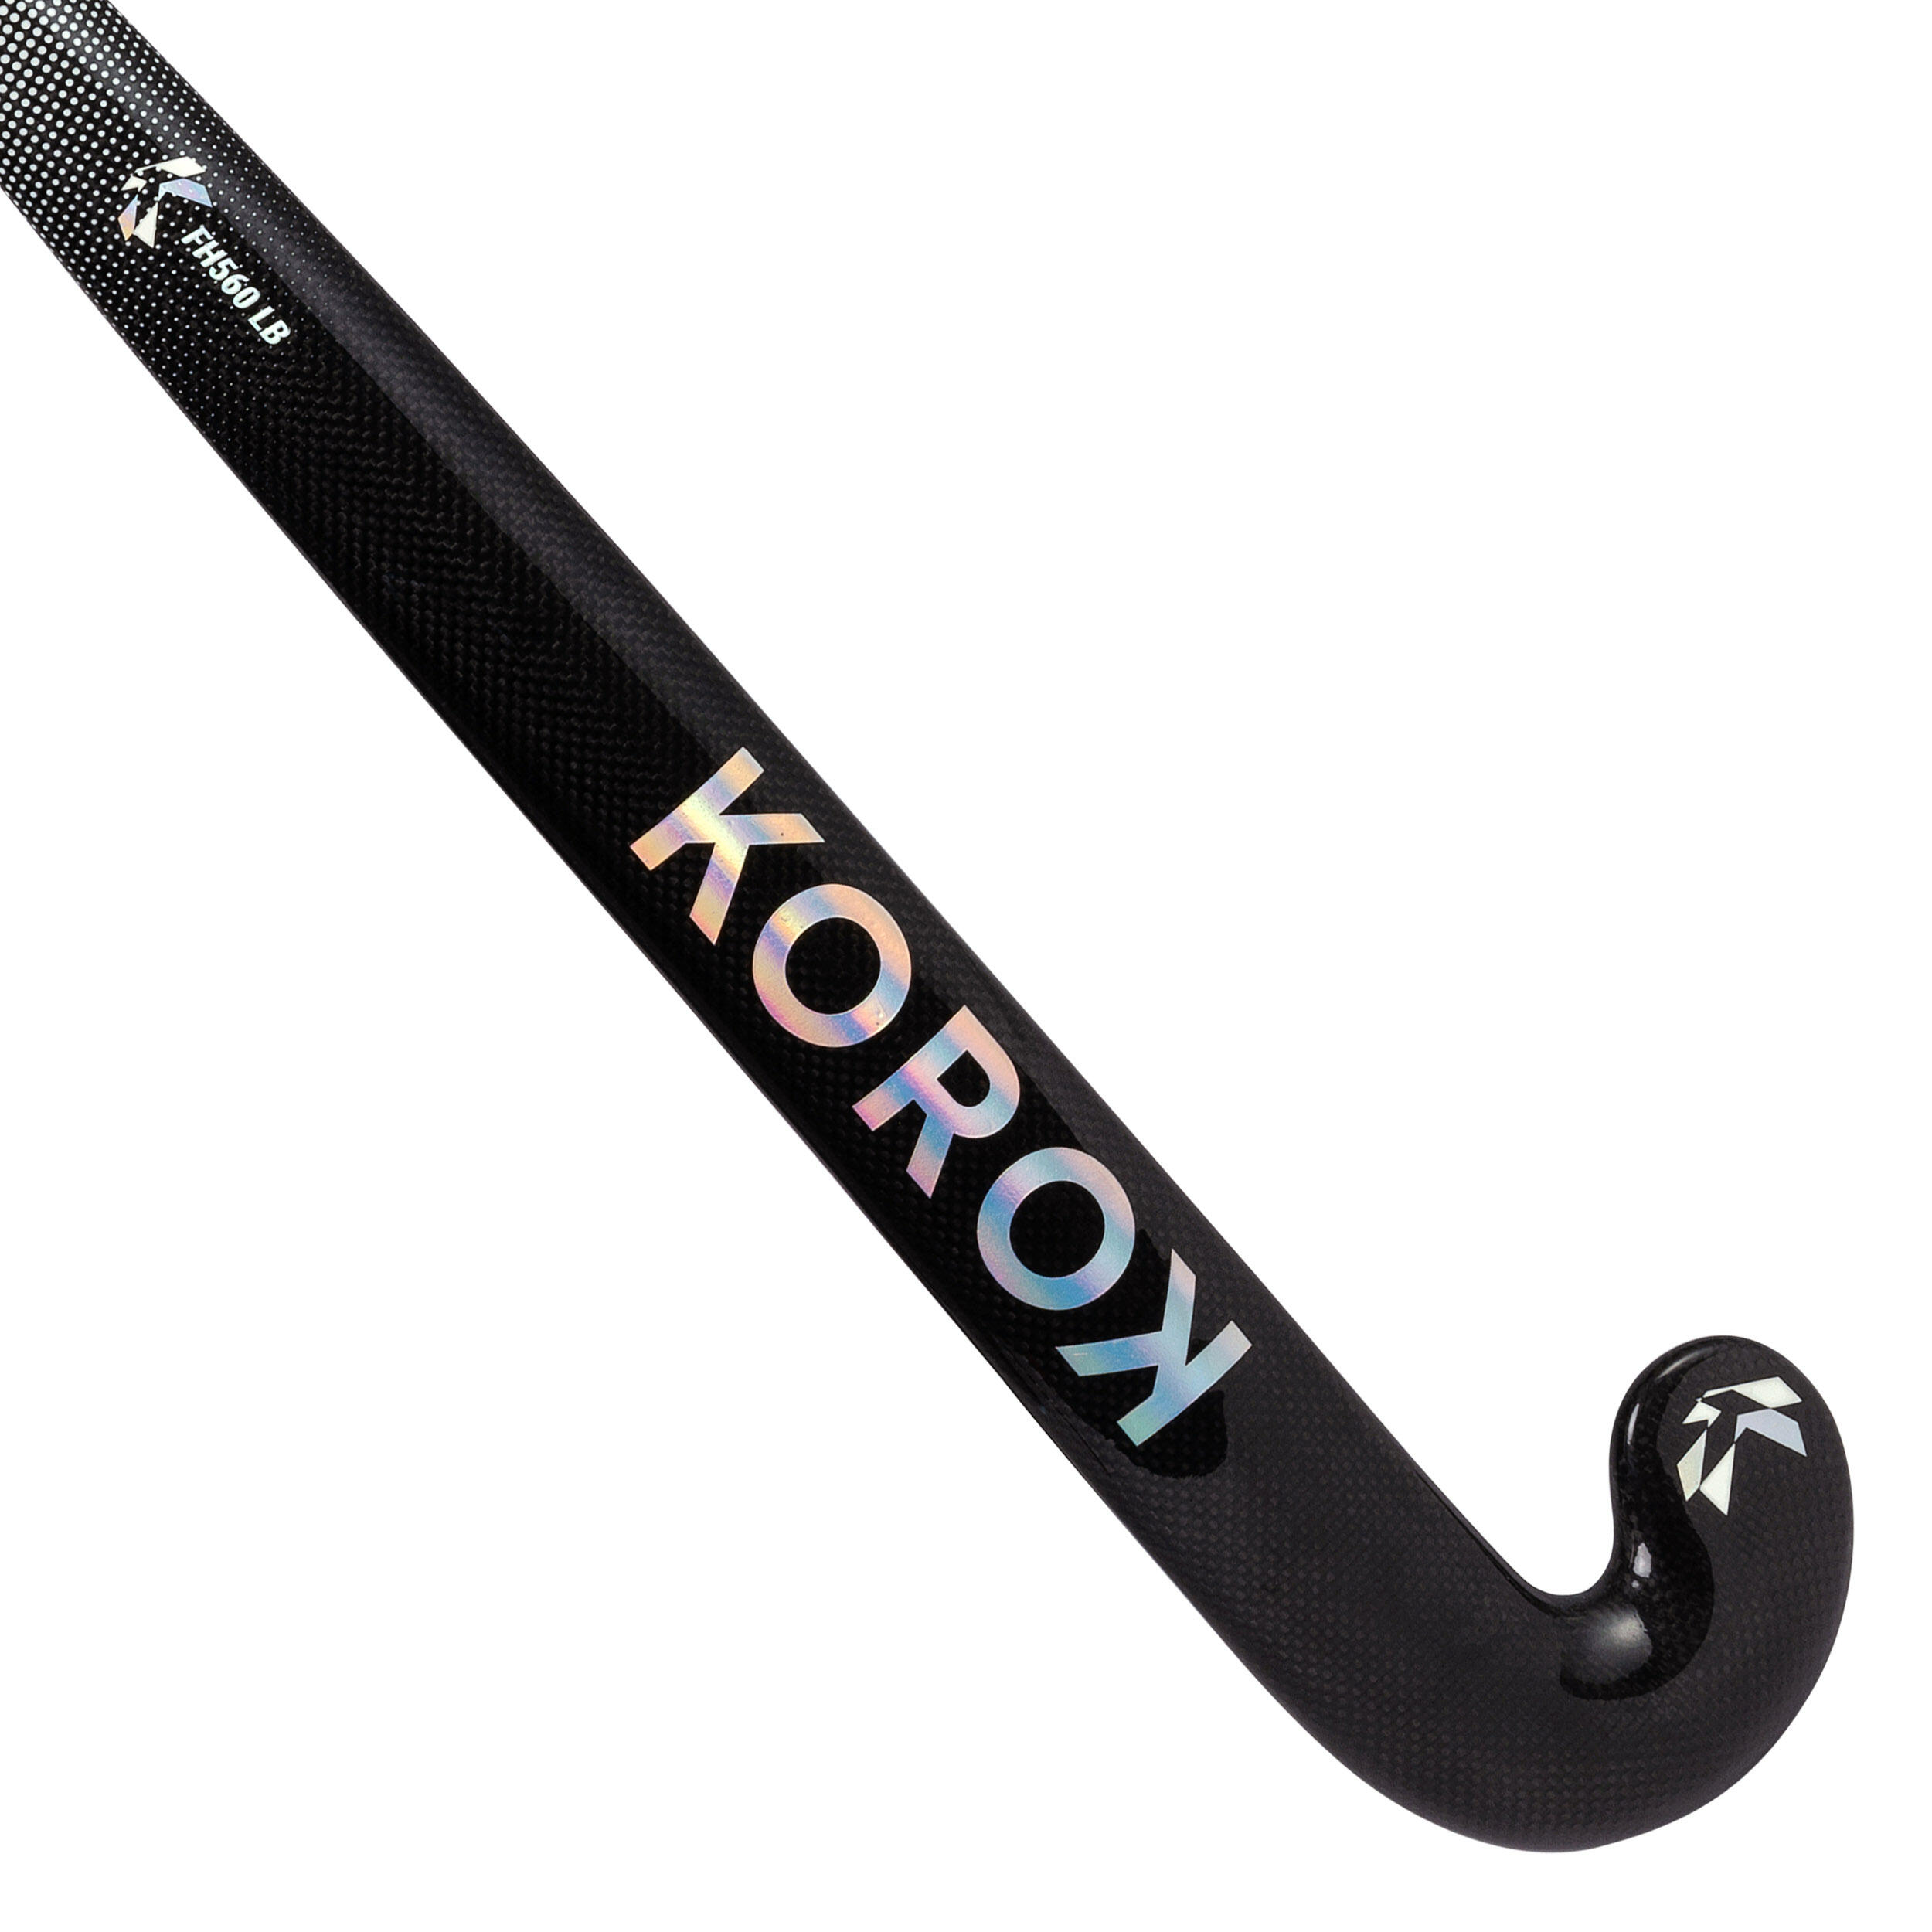 Adult Intermediate 60% Carbon Low Bow Field Hockey Stick FH560 - Black/Grey 9/12